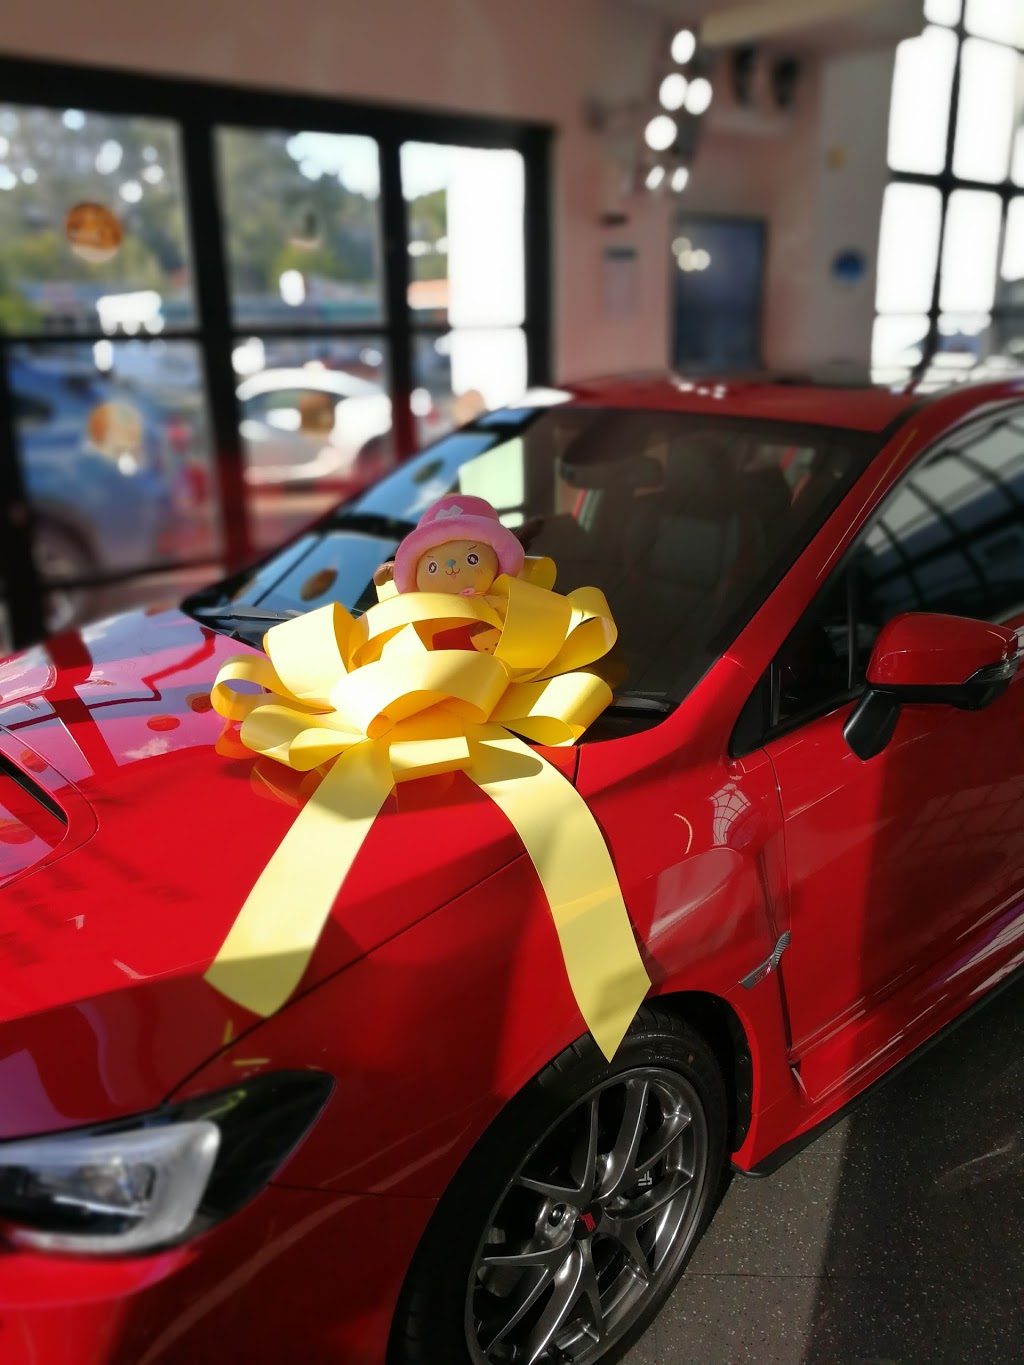 Subaru Toowong | car dealer | Corner Milton Road, and, Miskin St, Toowong QLD 4066, Australia | 0738716800 OR +61 7 3871 6800